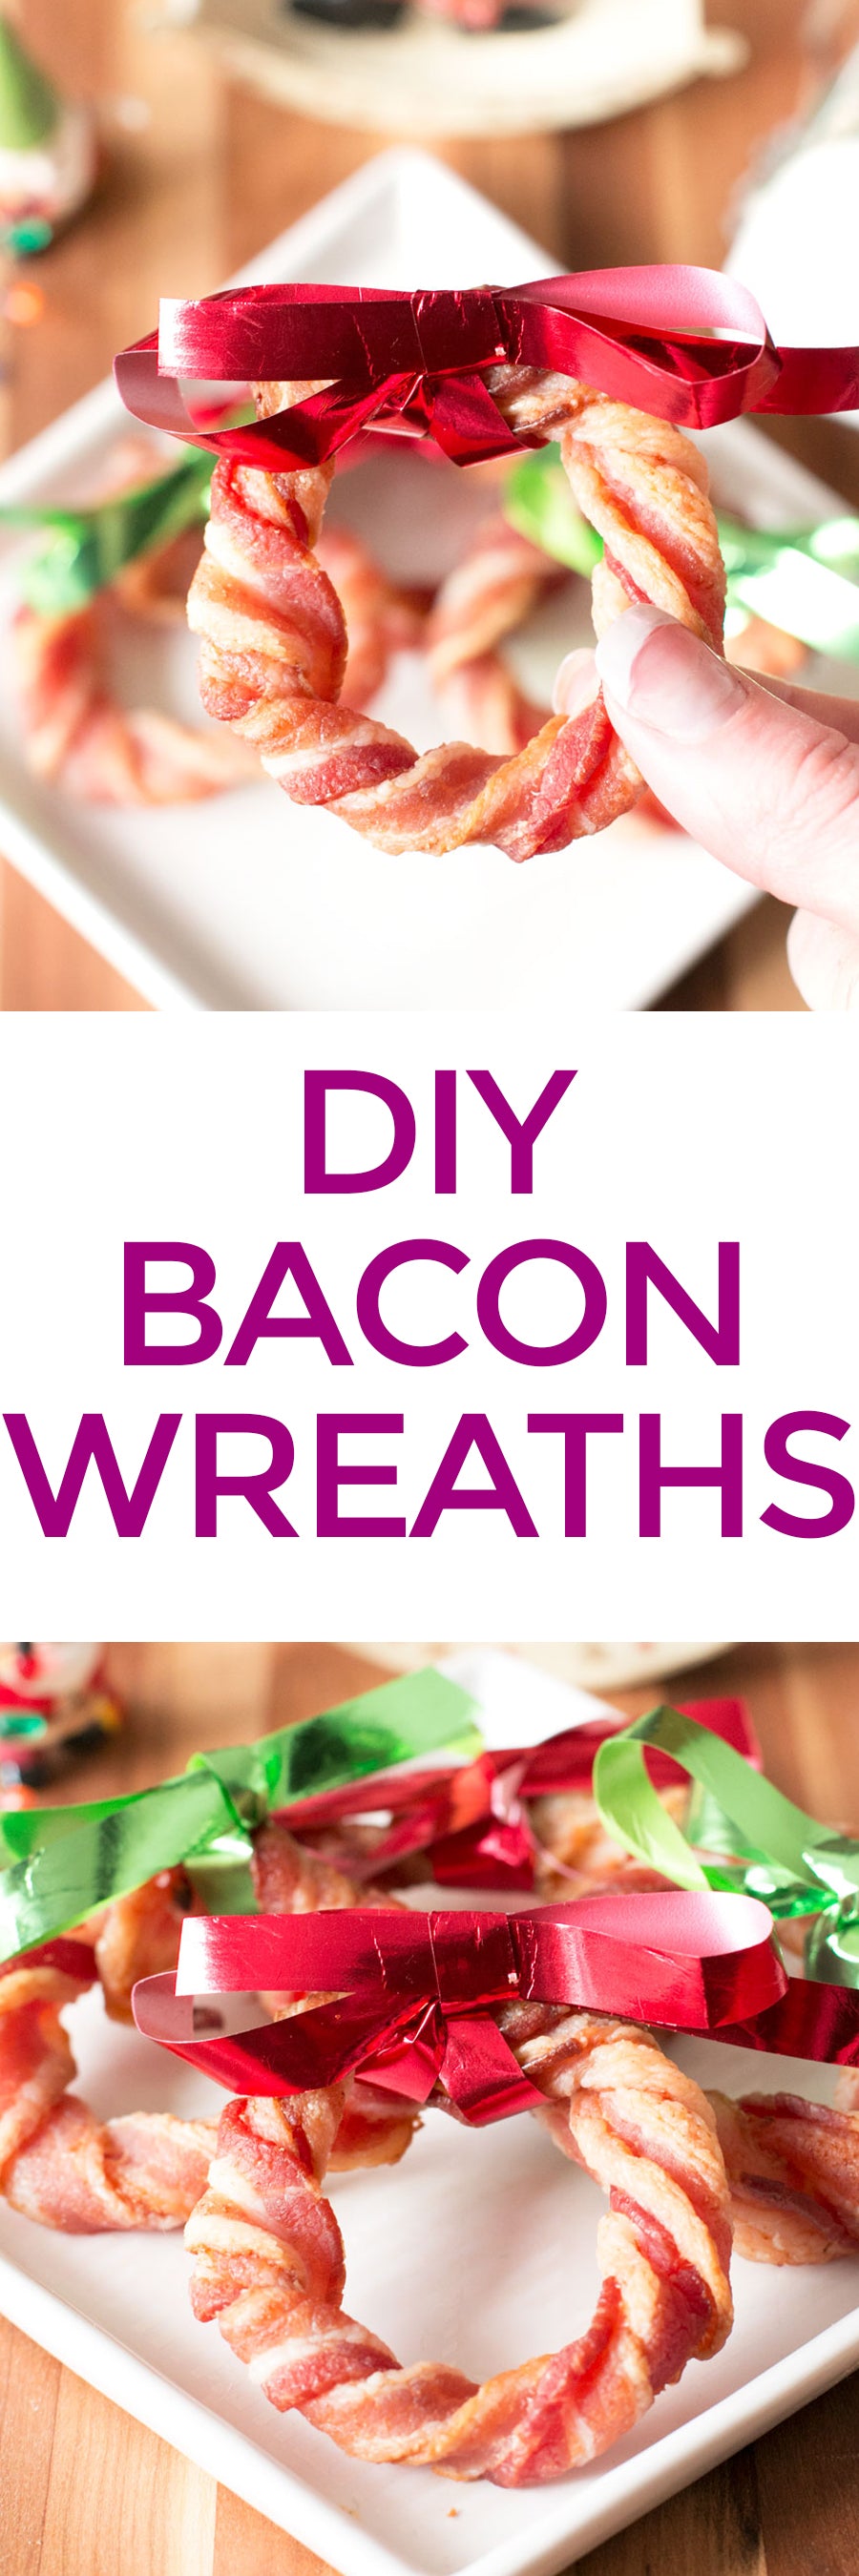 DIY Bacon Wreaths | pigofthemonth.com #christmas #bacon #recipe #DIY